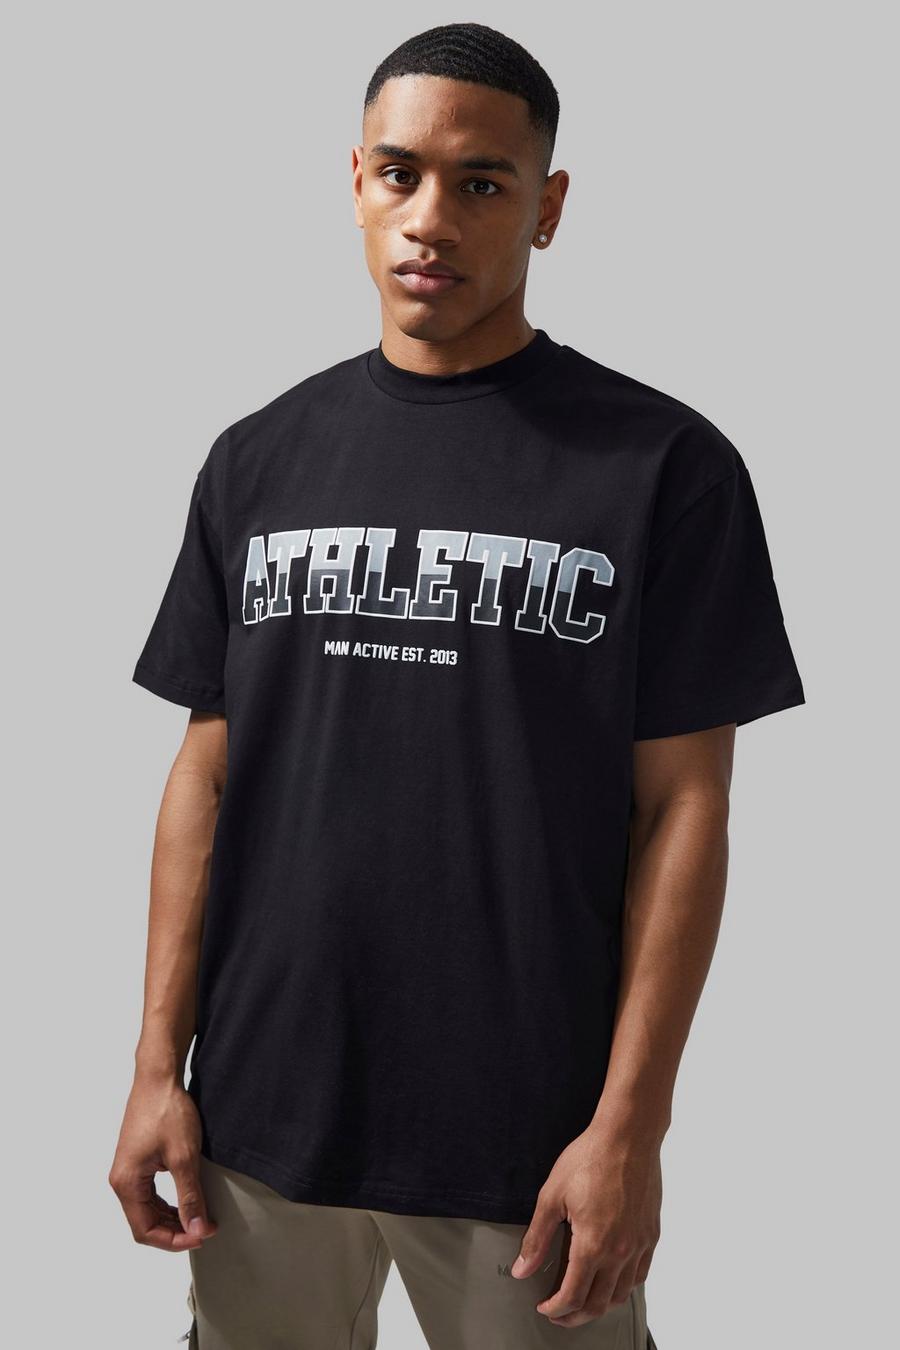 Black noir Man Active Gym Oversized Athletic T-shirt